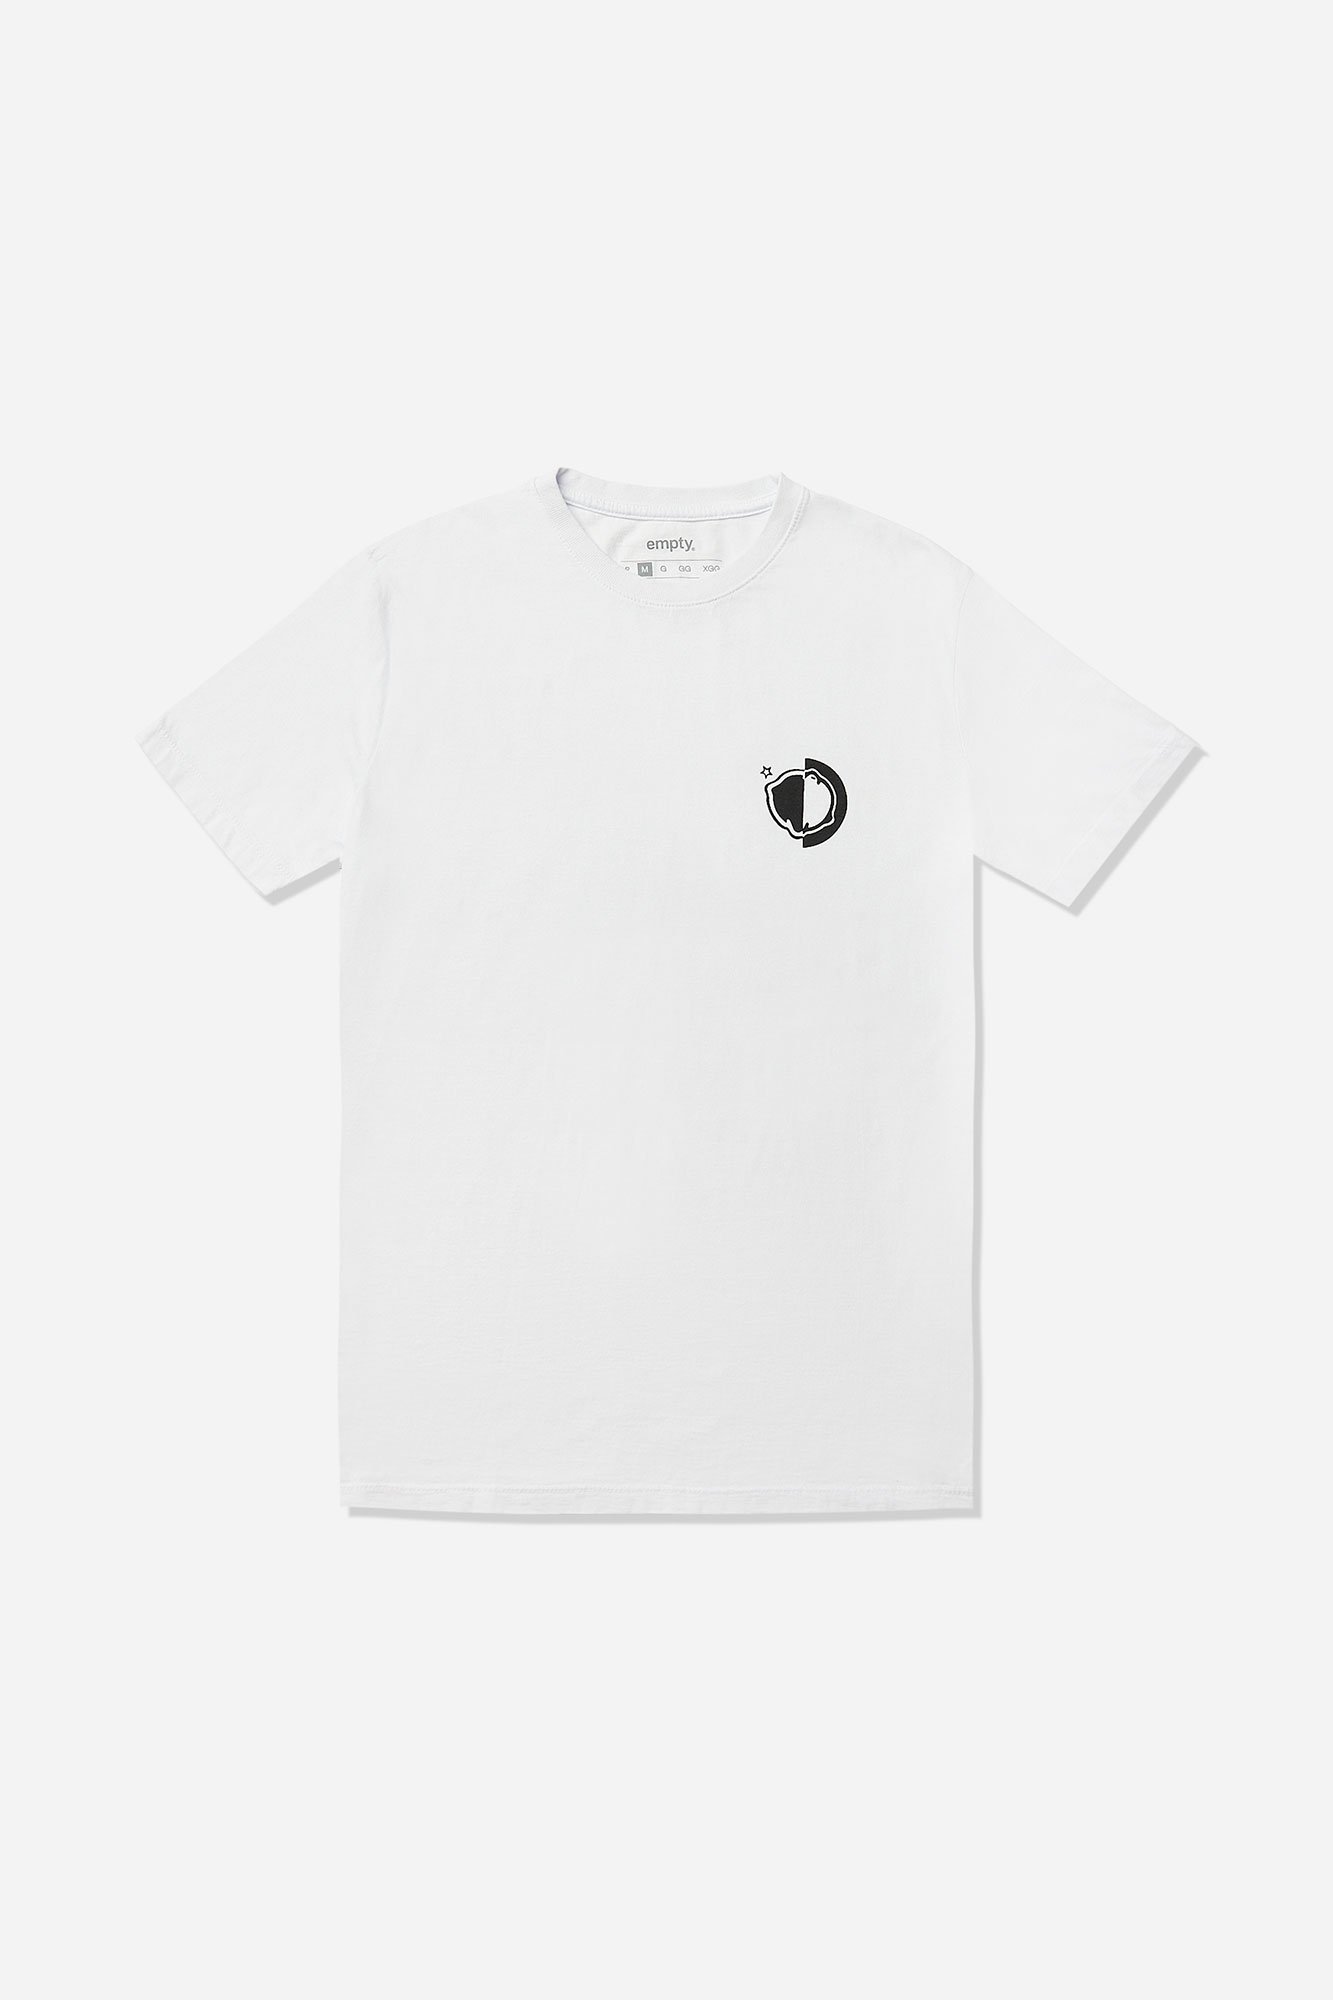 01 camiseta mind branco